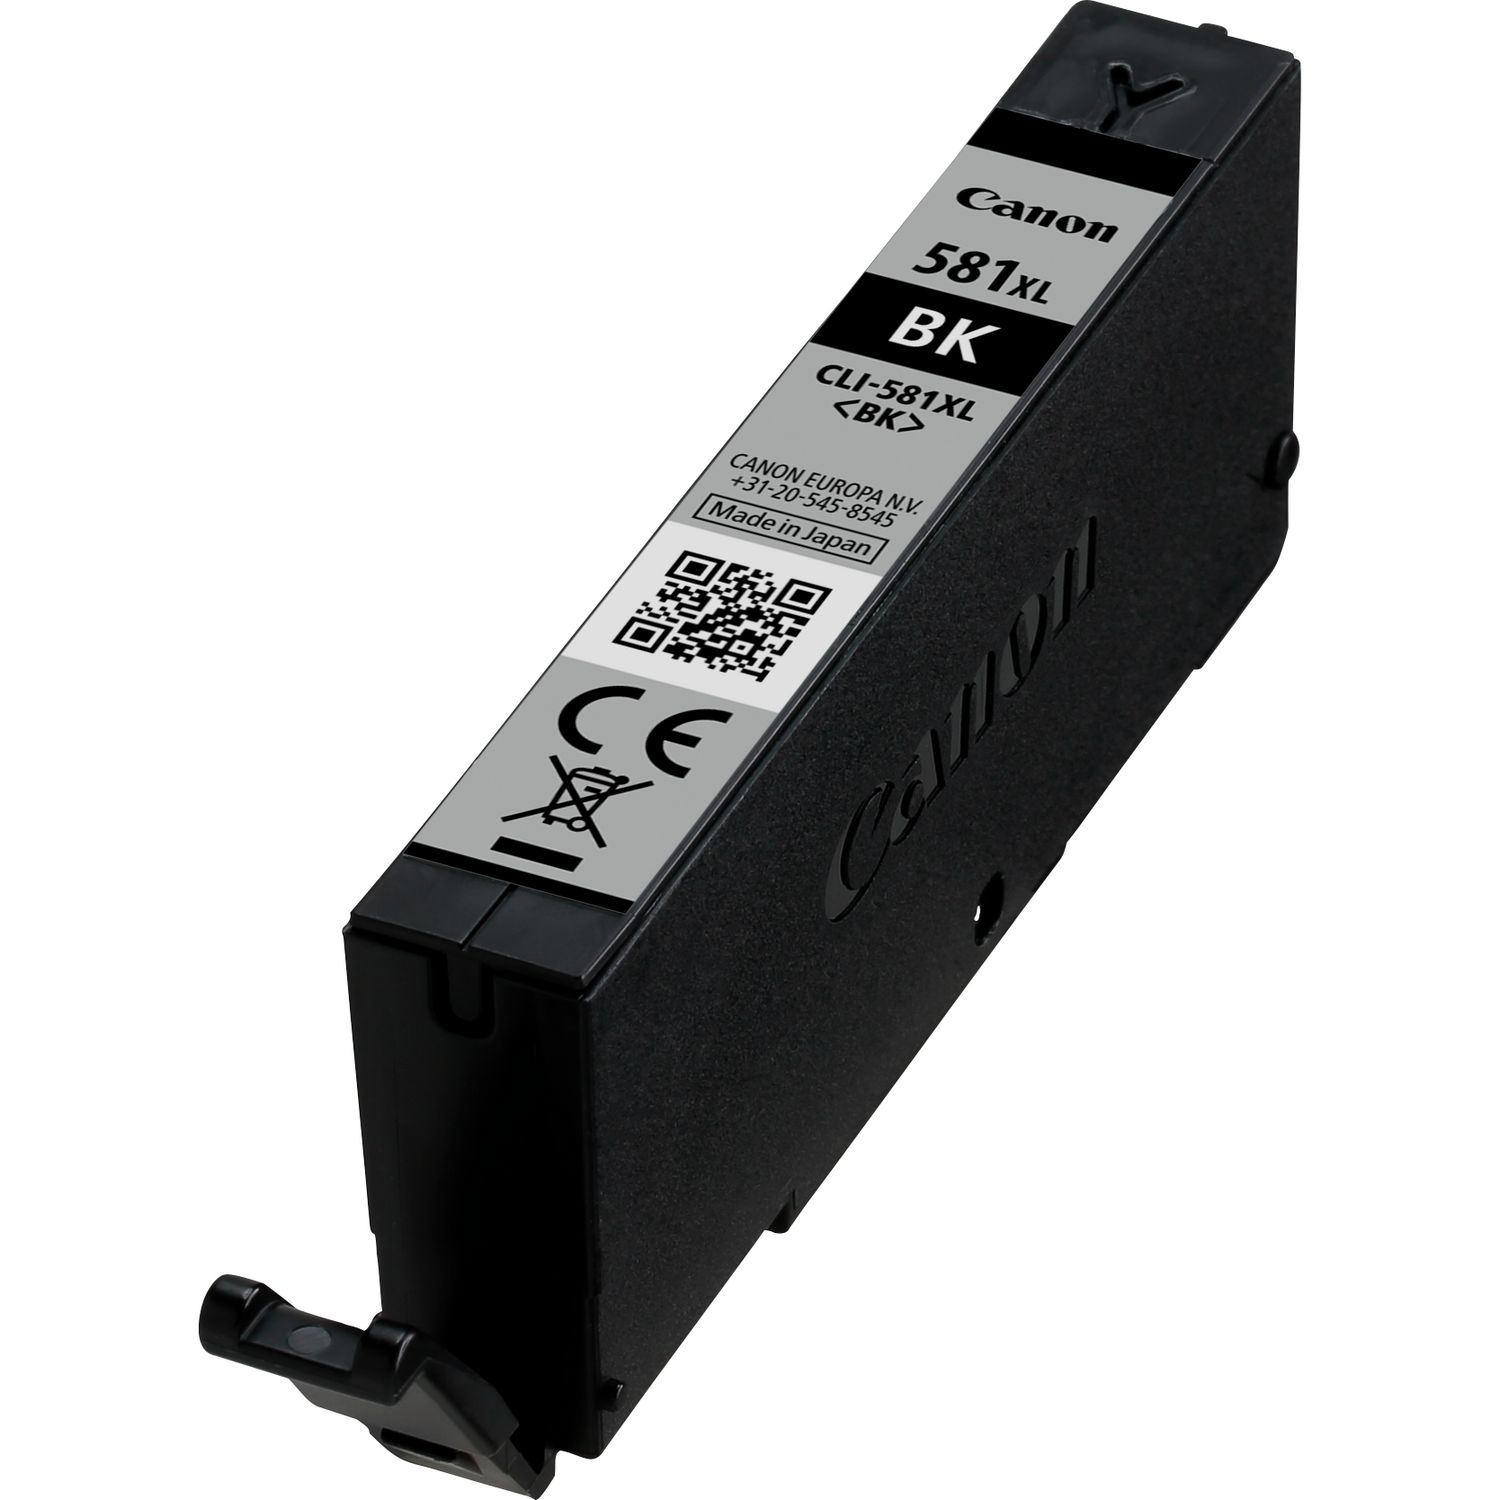 Ink Cli 581xl Bk Canon Supplies Ink Hv 2052c001 4549292086997